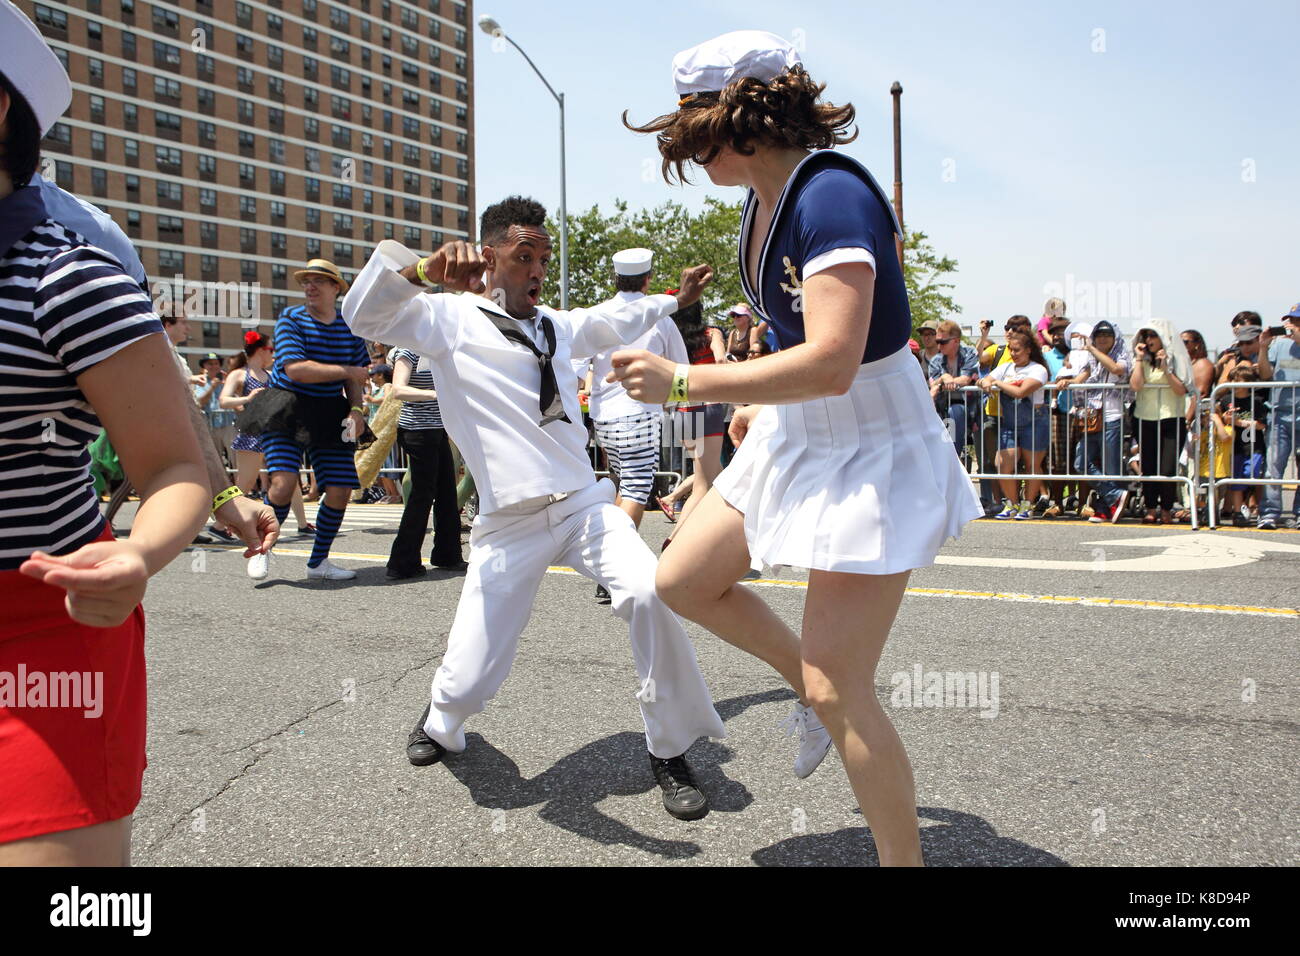 Parade-goers jive at the Mermaid Parade in Coney Island, Brooklyn, New York on June 22, 2013. Stock Photo